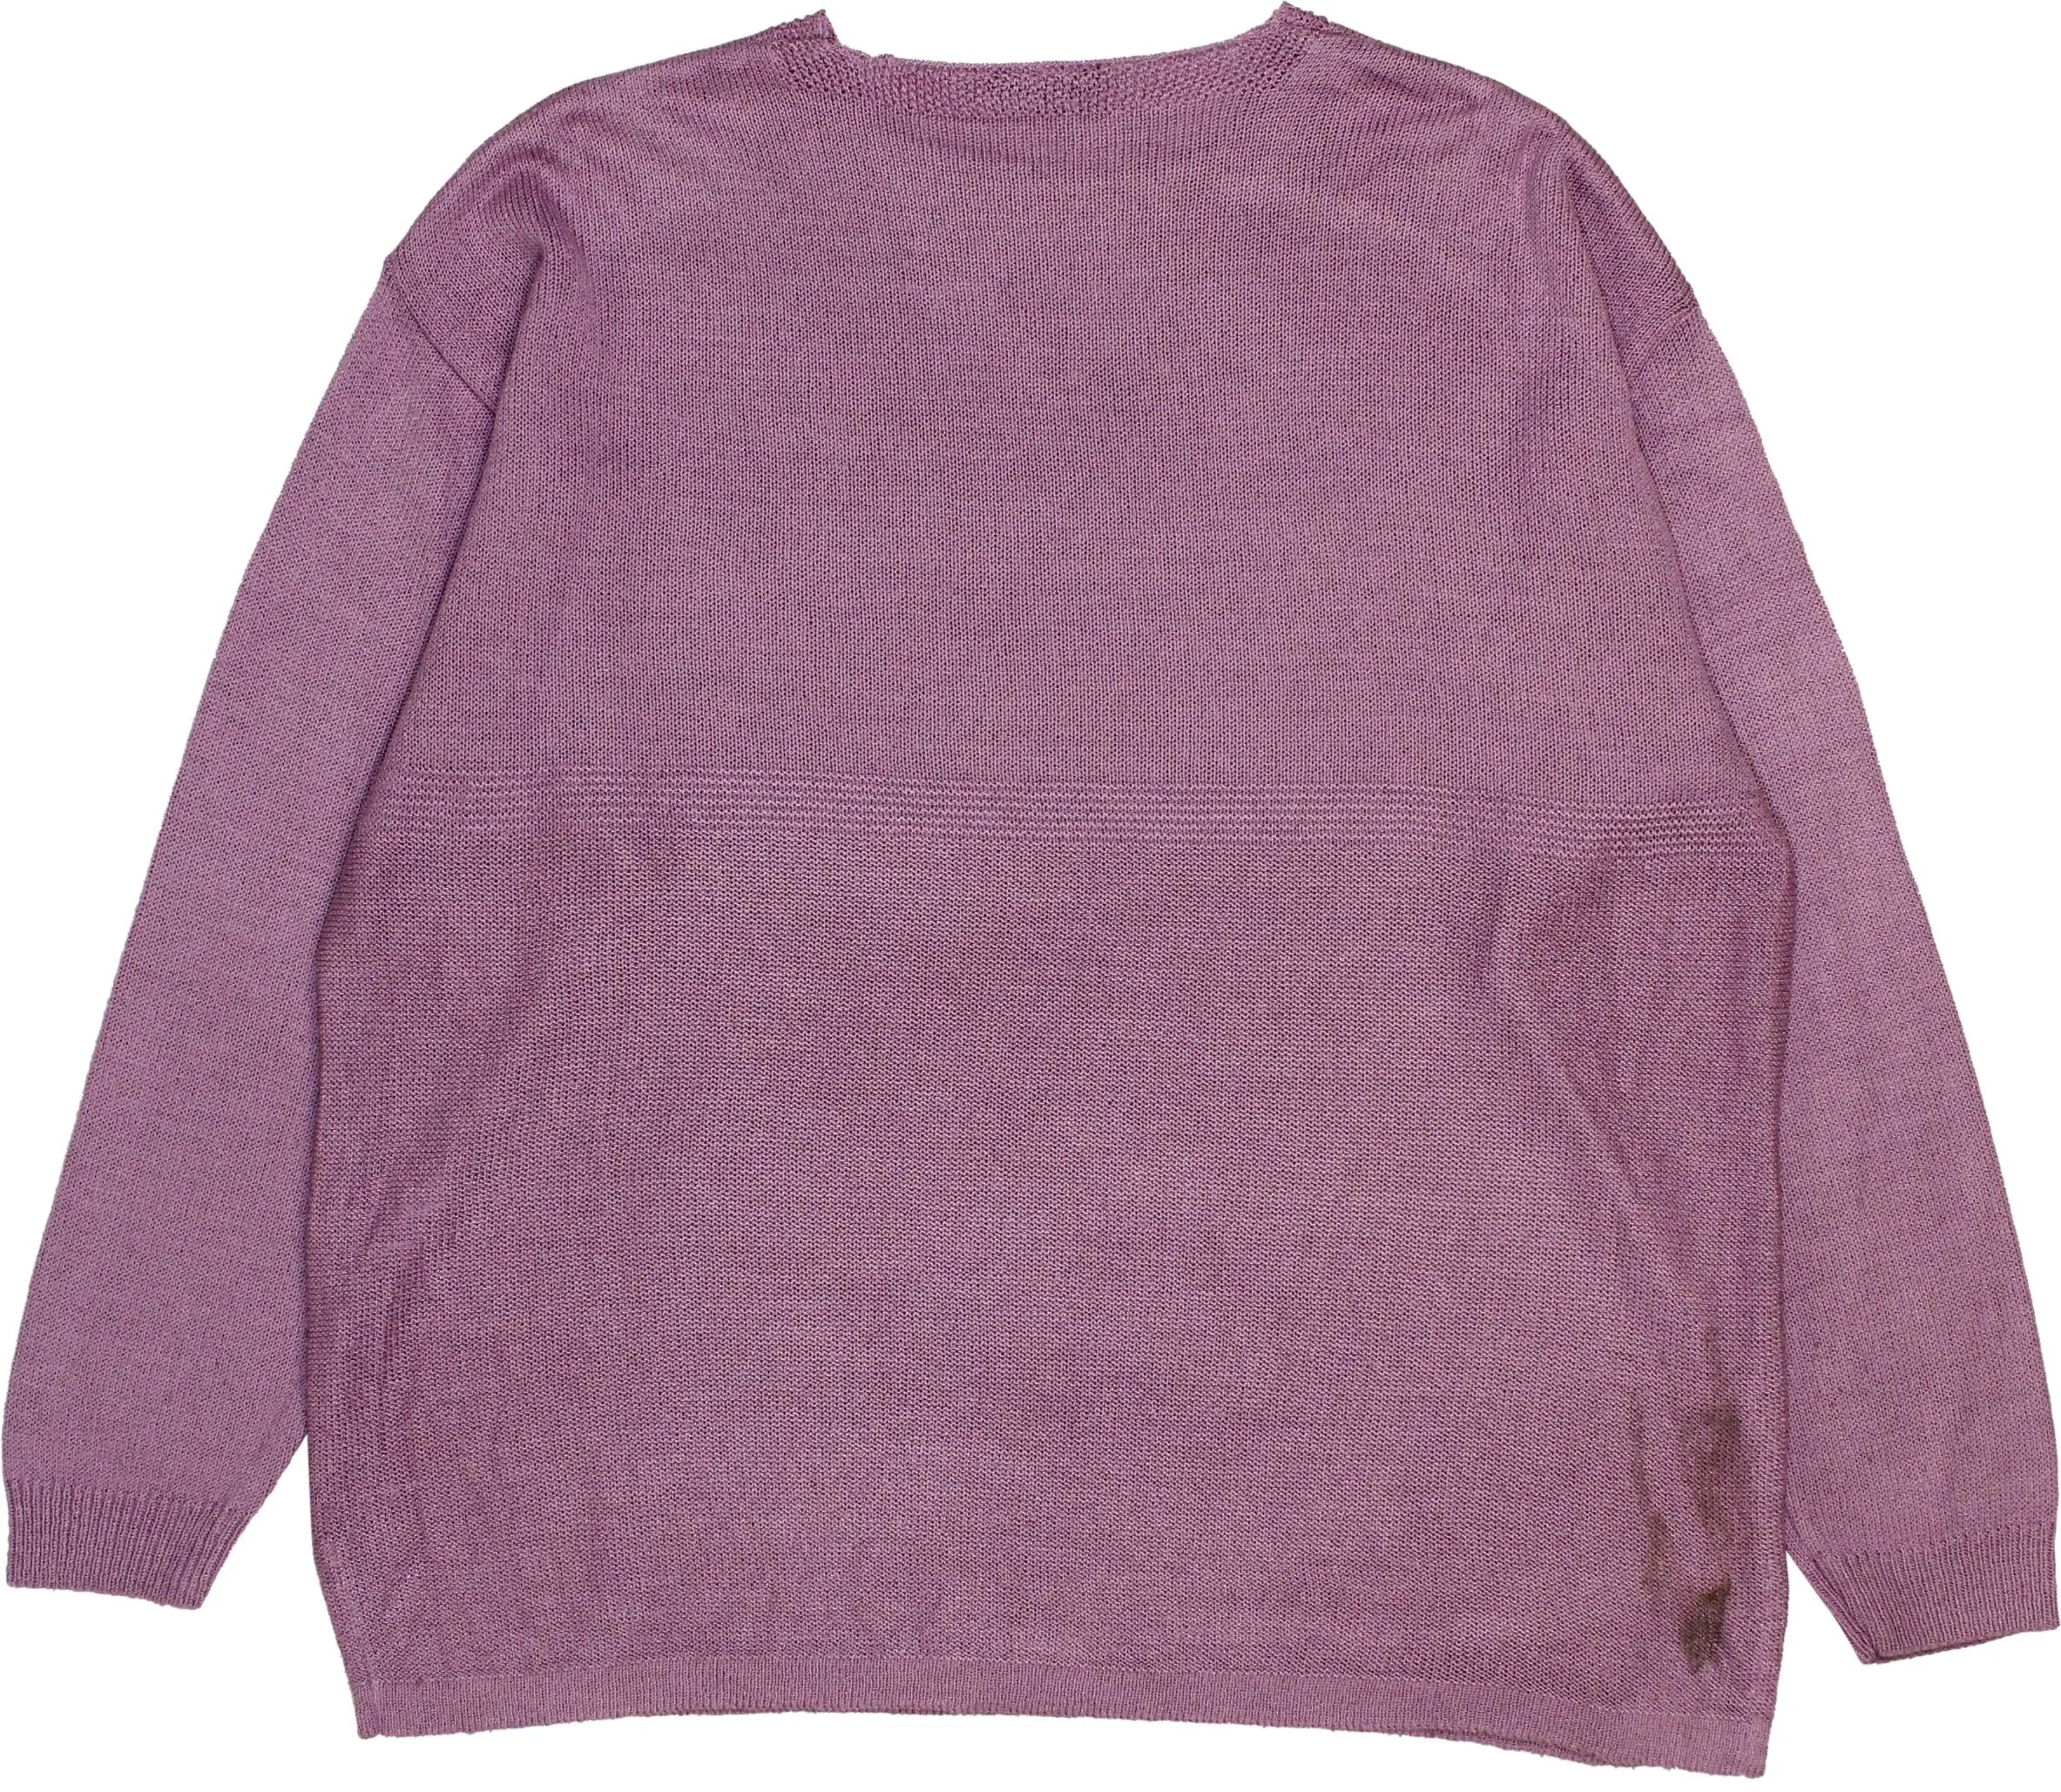 Mammascha - Purple Plain Jumper- ThriftTale.com - Vintage and second handclothing